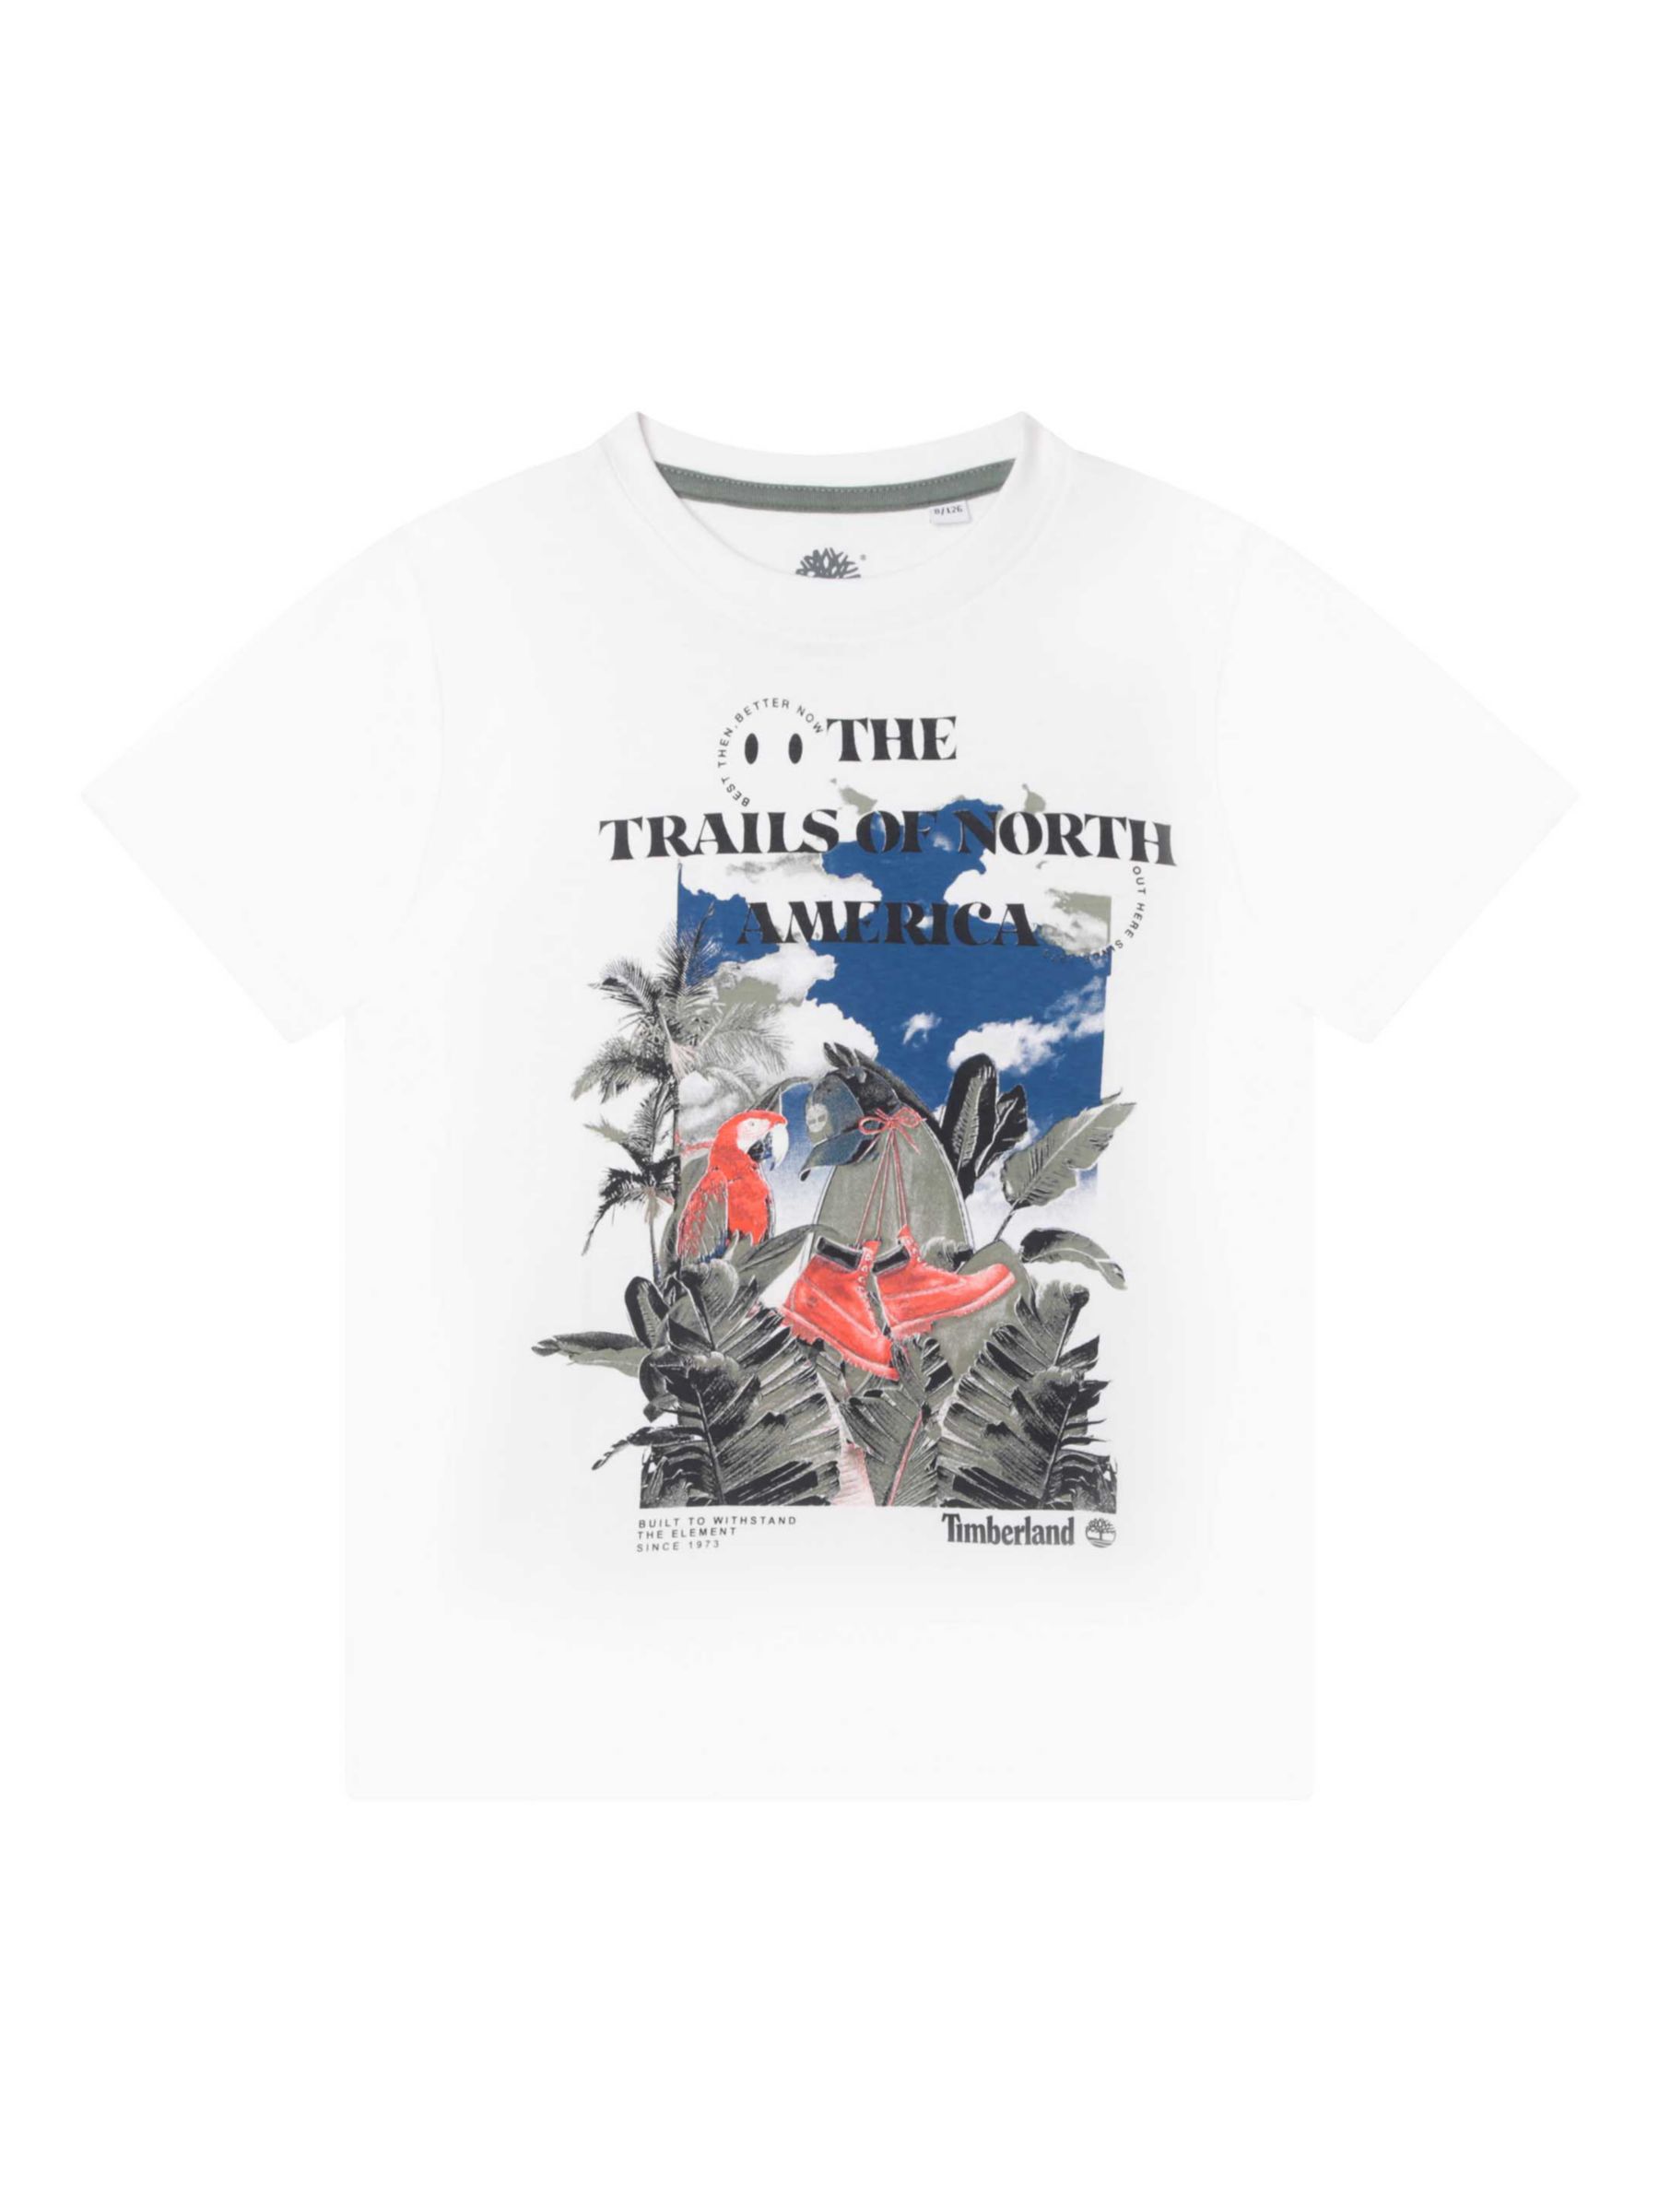 Timberland Kids' The Trails of North America T-Shirt, White, 4 years